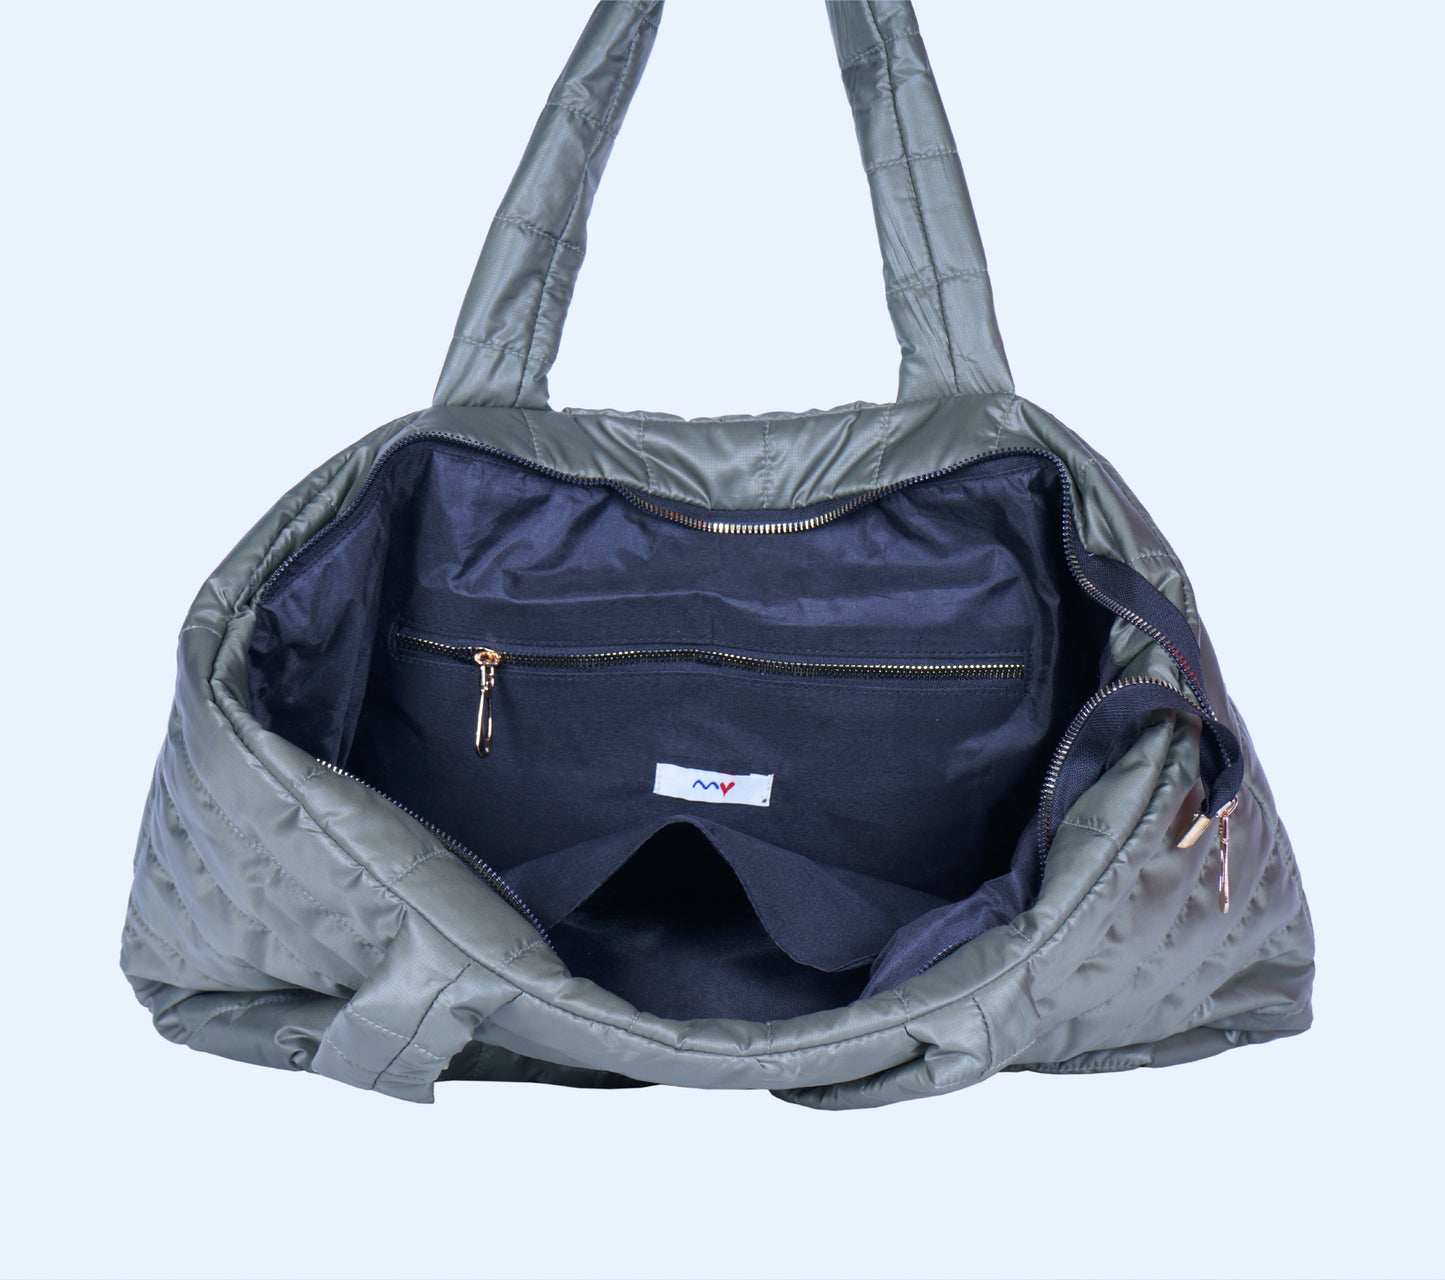 Shark Grey Bag